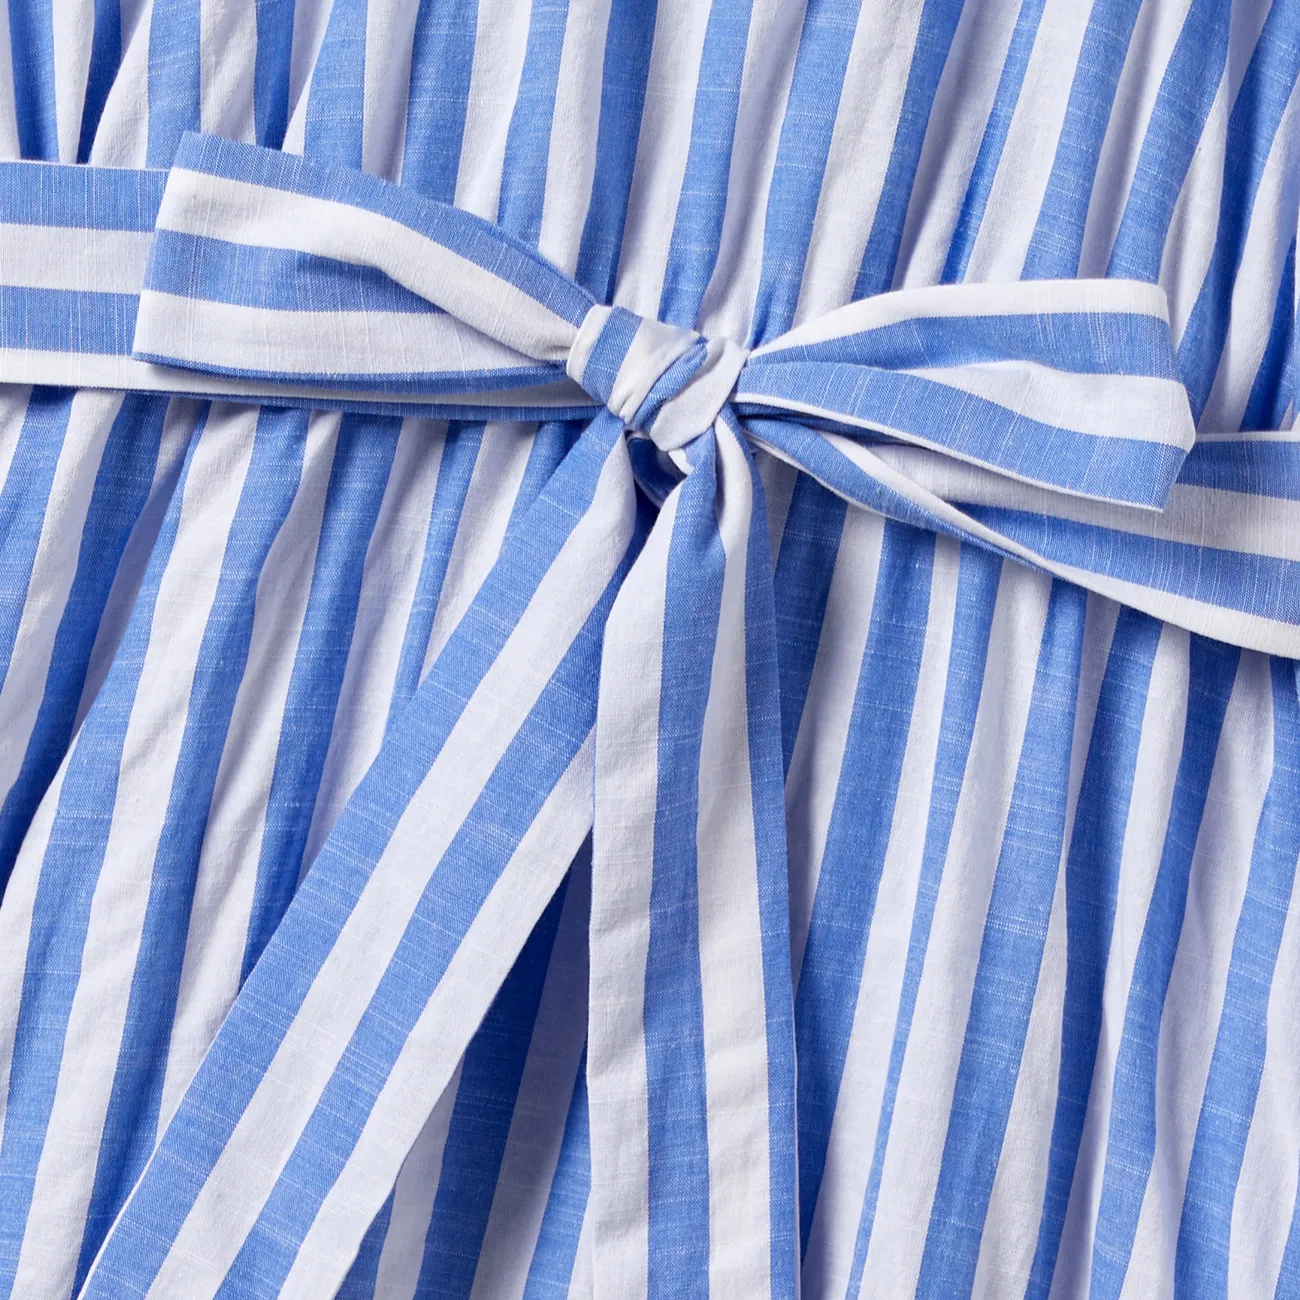 Family Matching Stripe Shirt and High Neck Halter Tiered Tassel Trim Dress Sets Blue big image 1